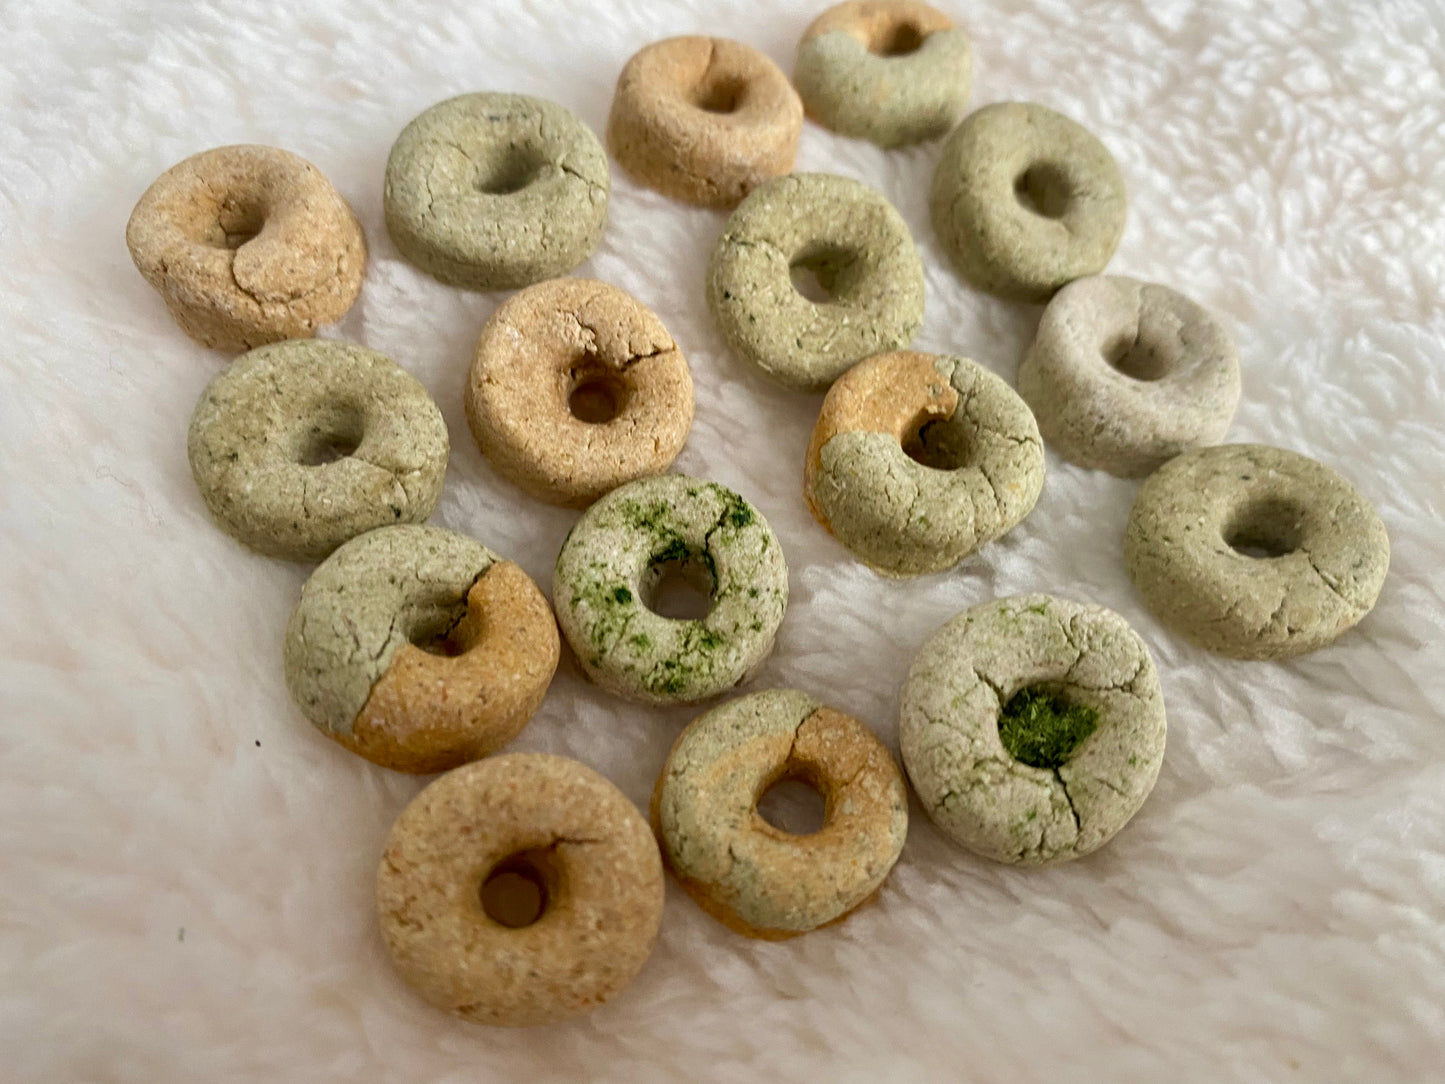 Organic/Natural mini donuts (treats)!